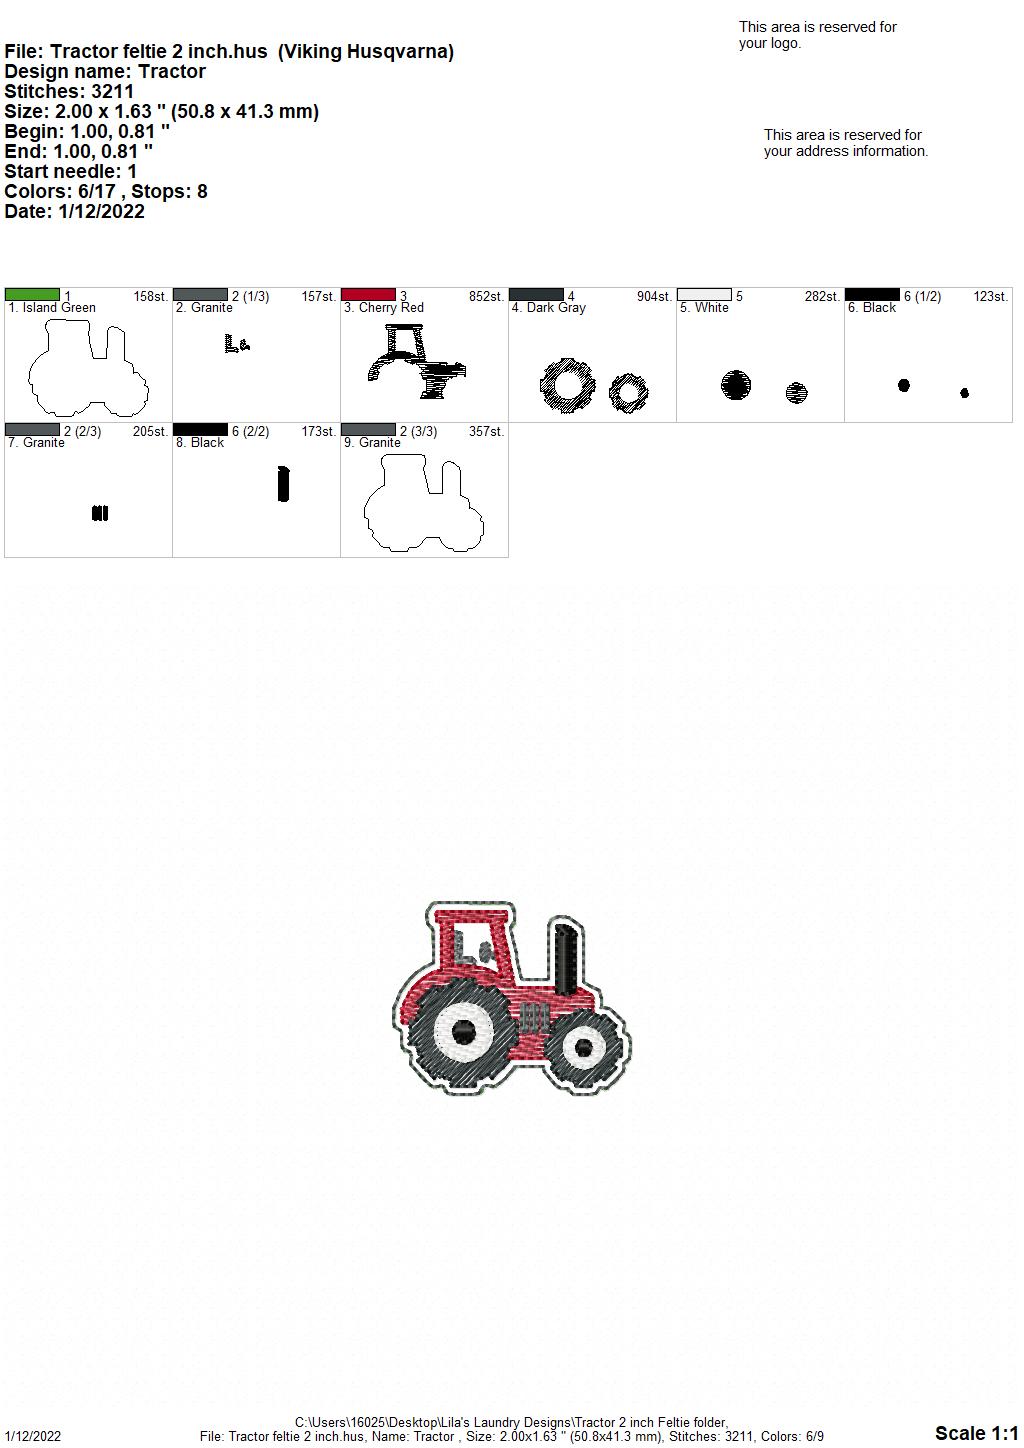 Tractor 2" Feltie - Digital Embroidery Design